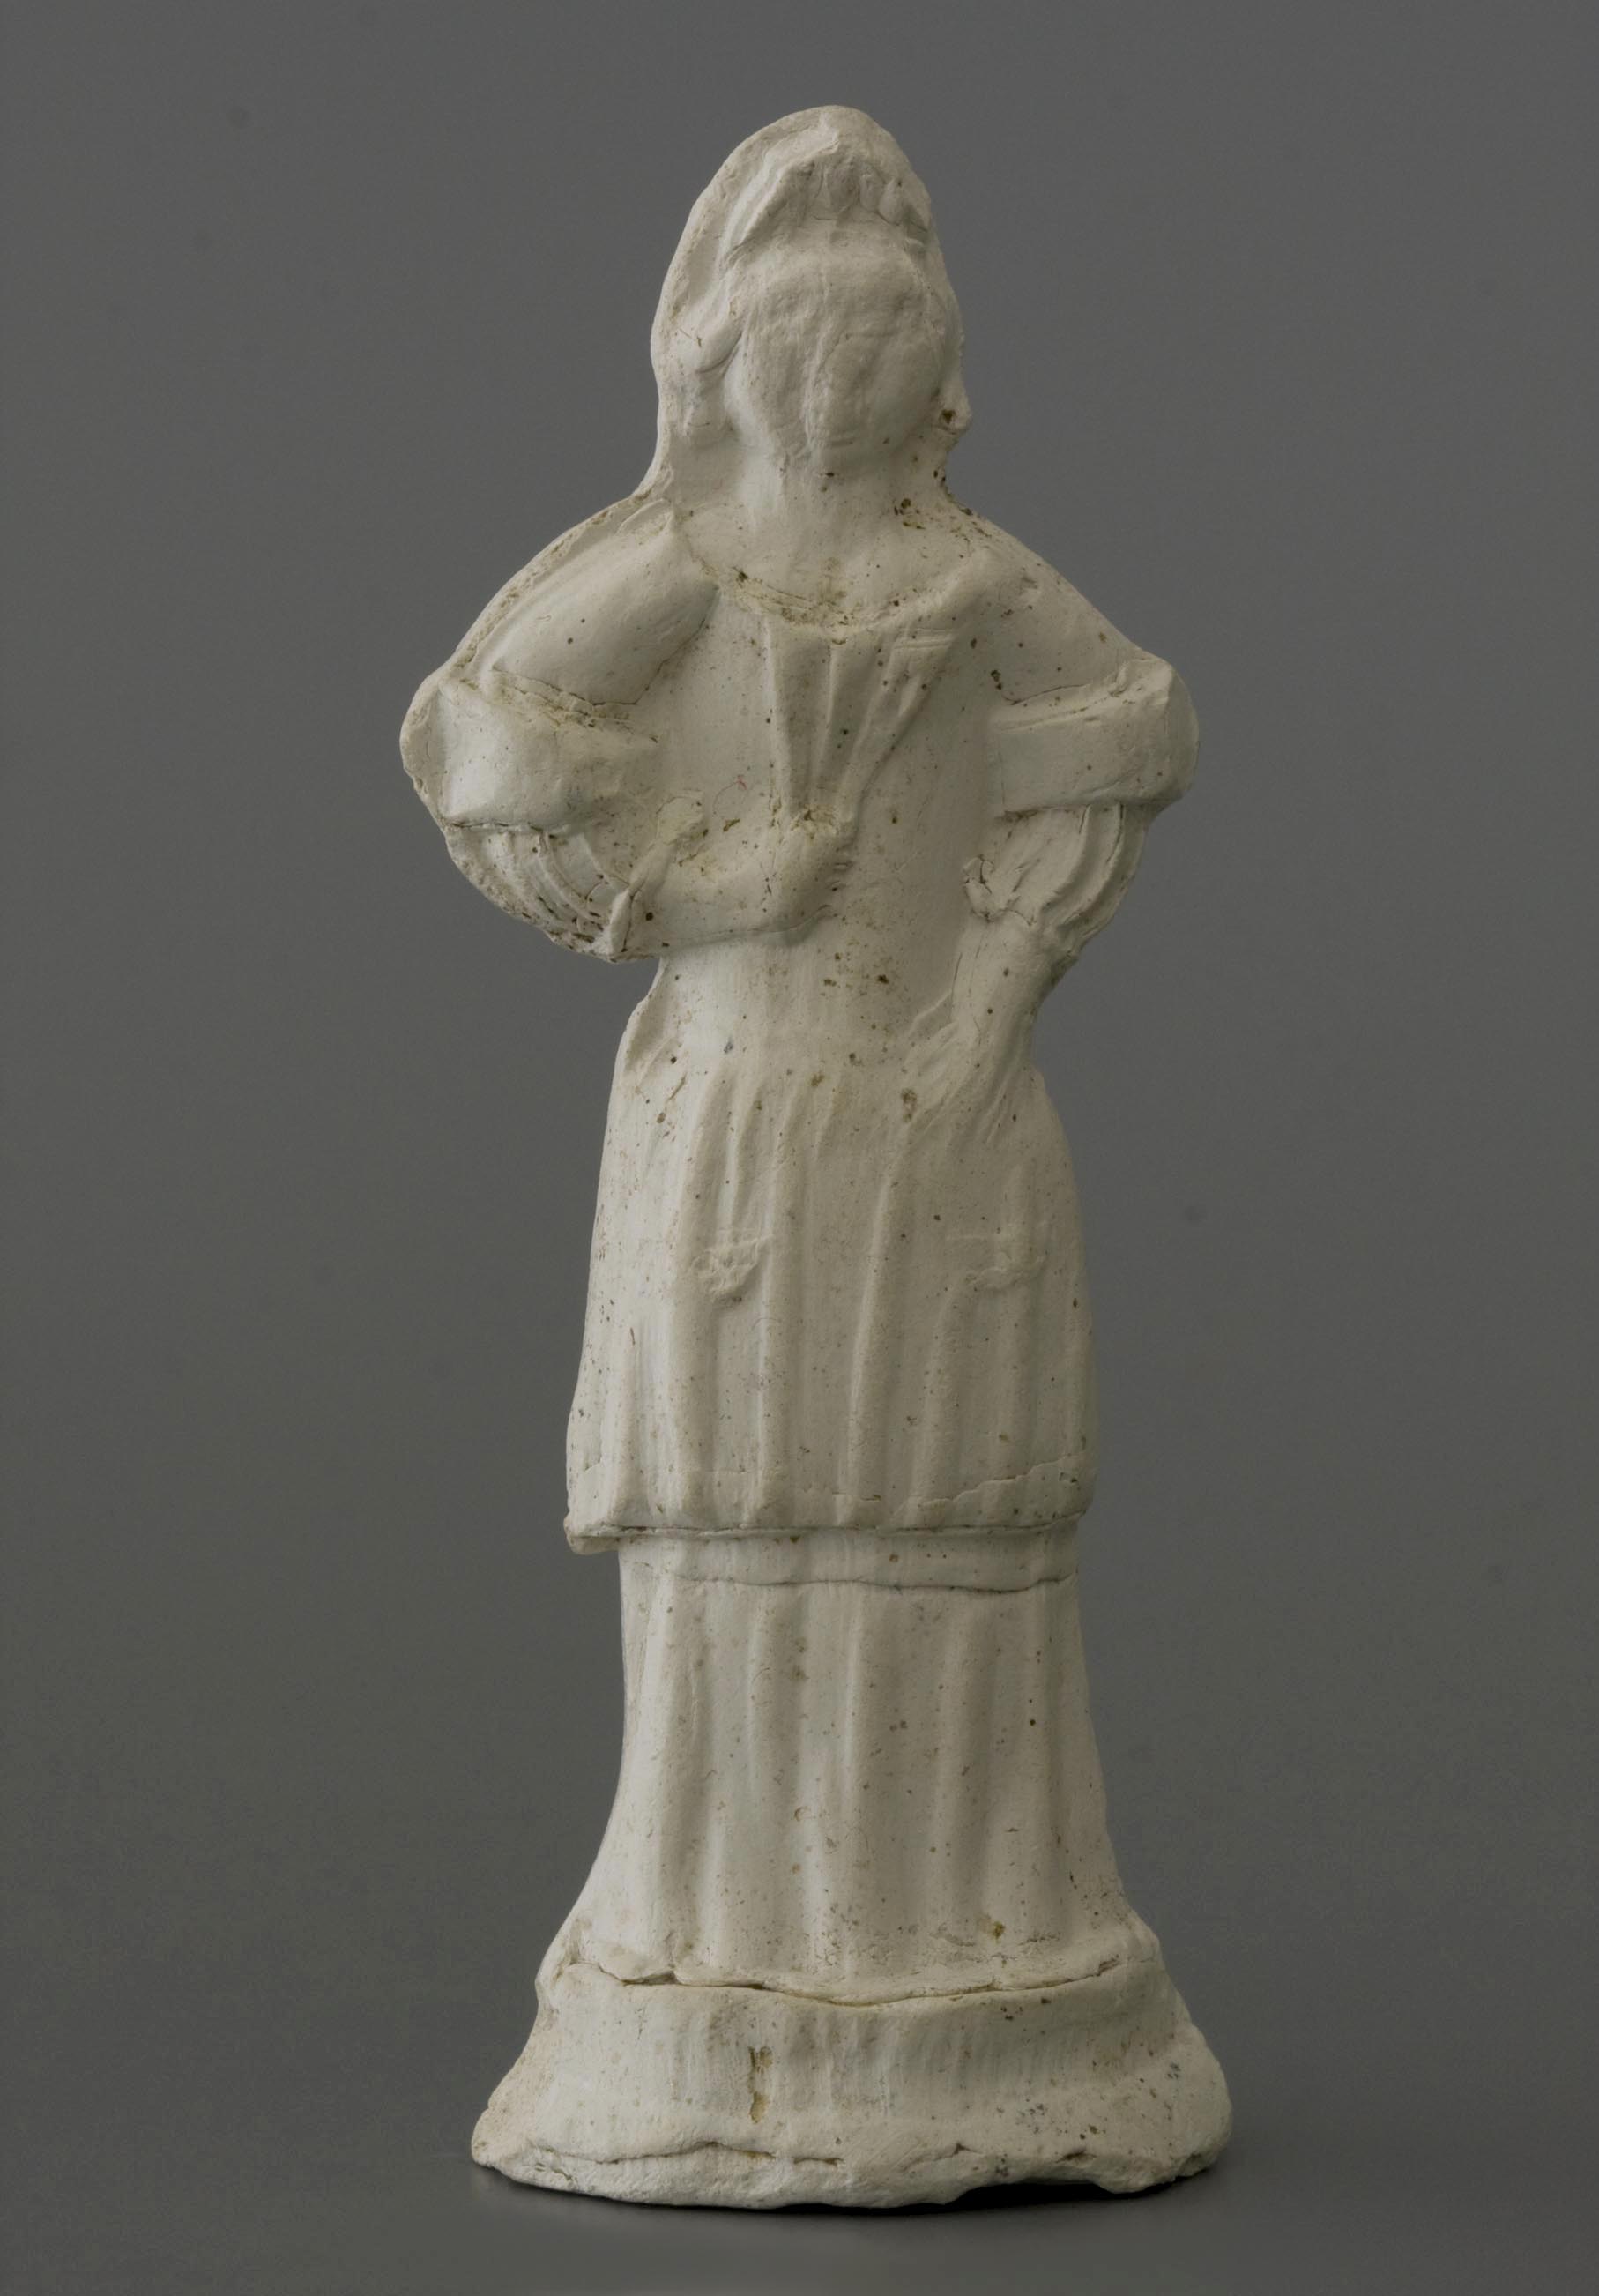 09-16.842-pipeclay-figurine-woman-1